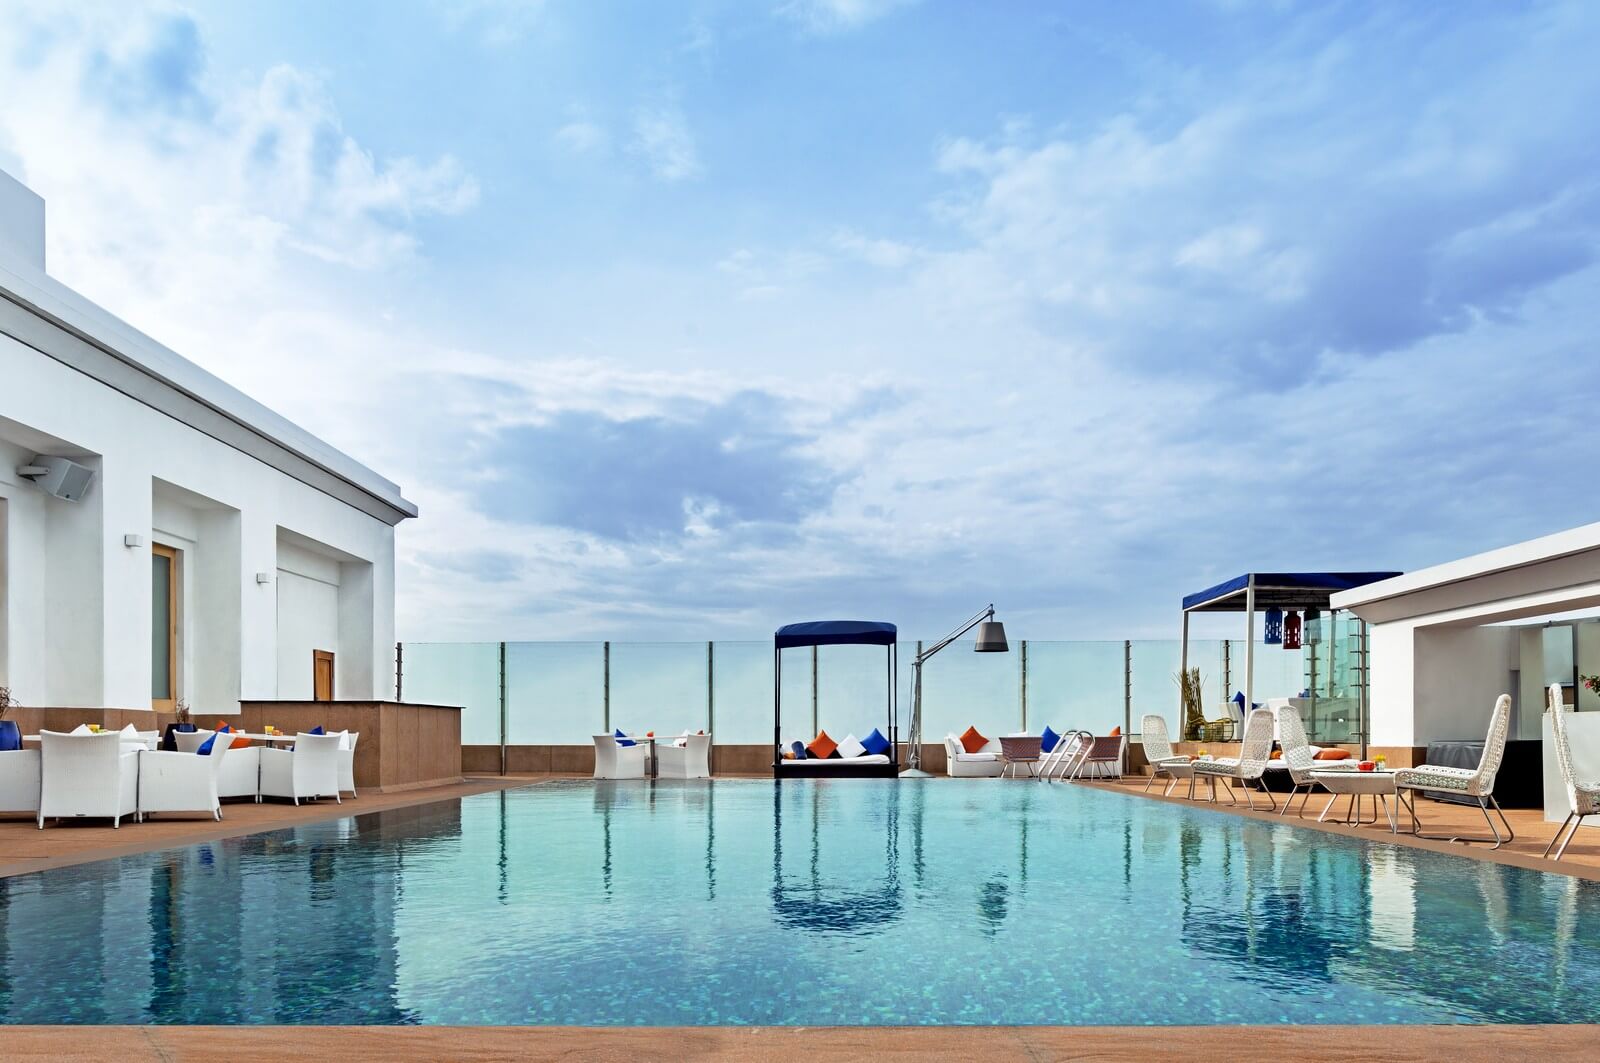 Aqua Poolside Bar at The Park Hotels Chennai